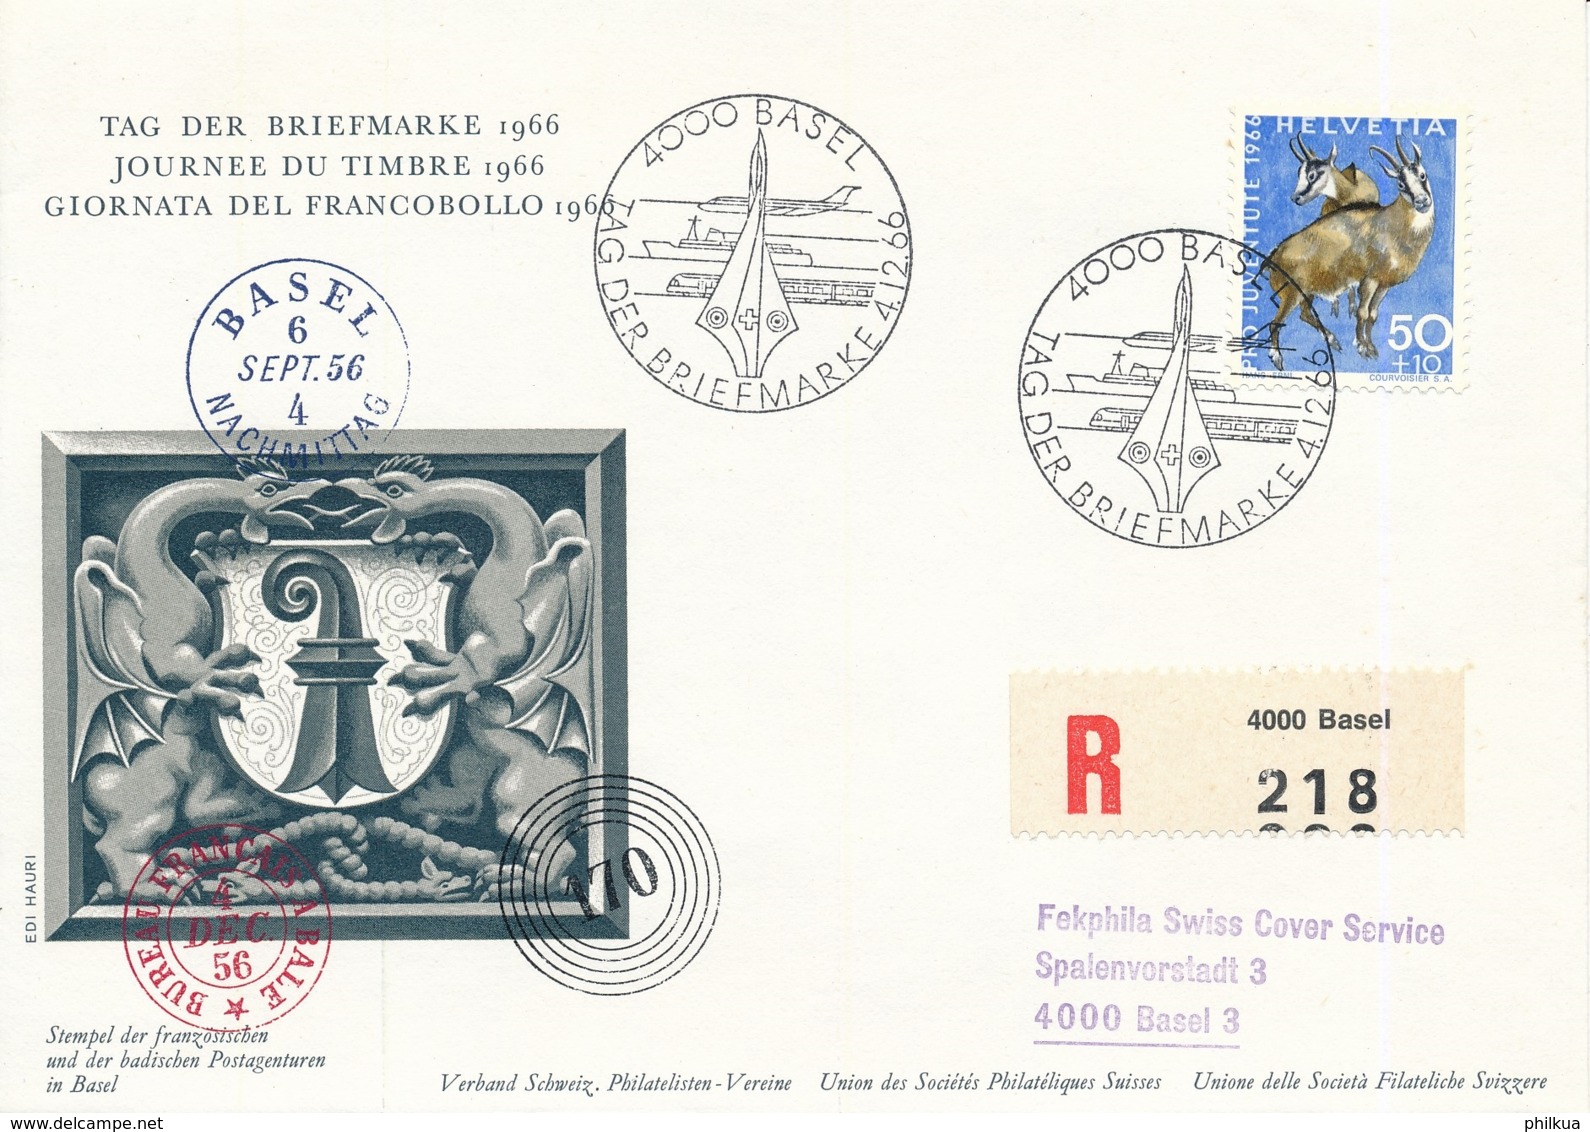 1966 Tag Der Briefmarke BASEL - Journee Du Timbre - Giornata Del Francobollo - Illustrierter R-Brief - Giornata Del Francobollo